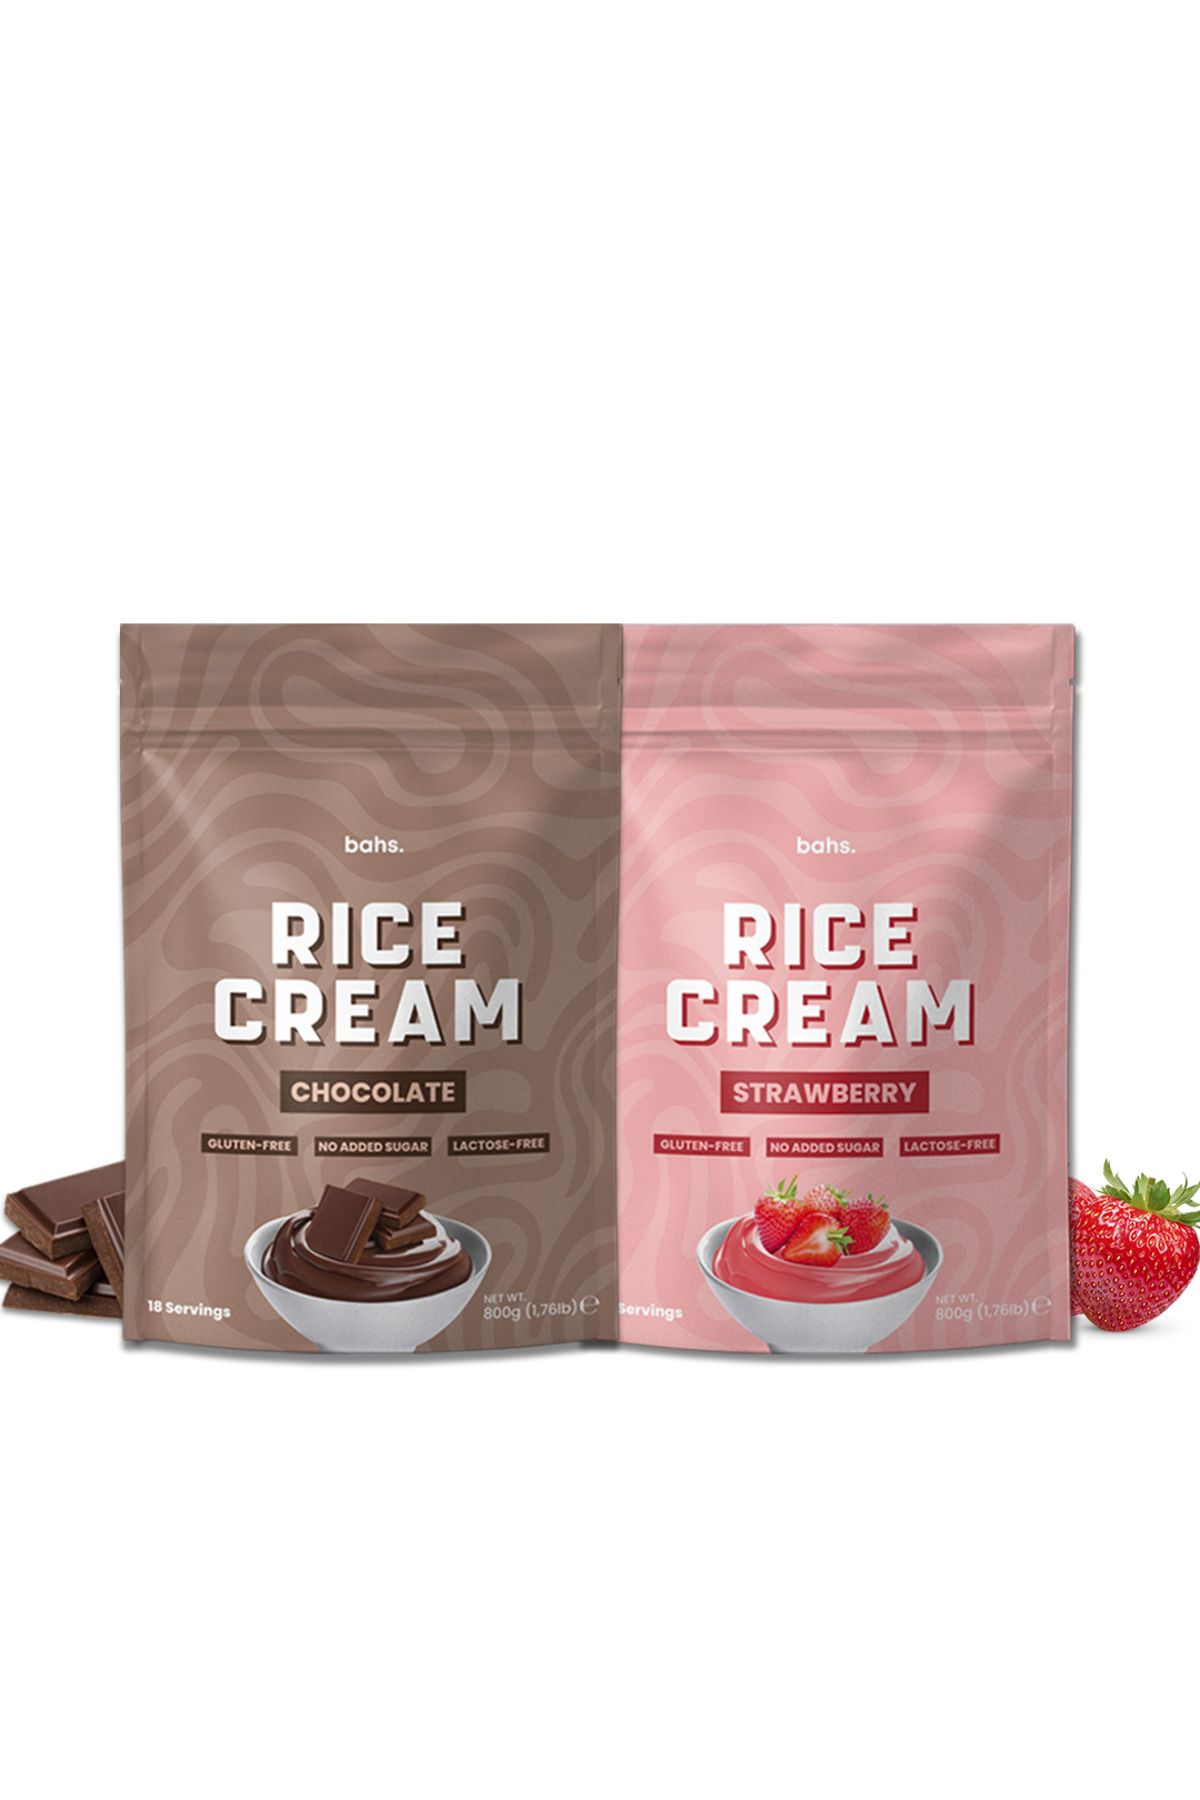 Bahs İkili Rice Cream Paketi (Chocolate & Strawberry) - 1600gr - 36 Servis